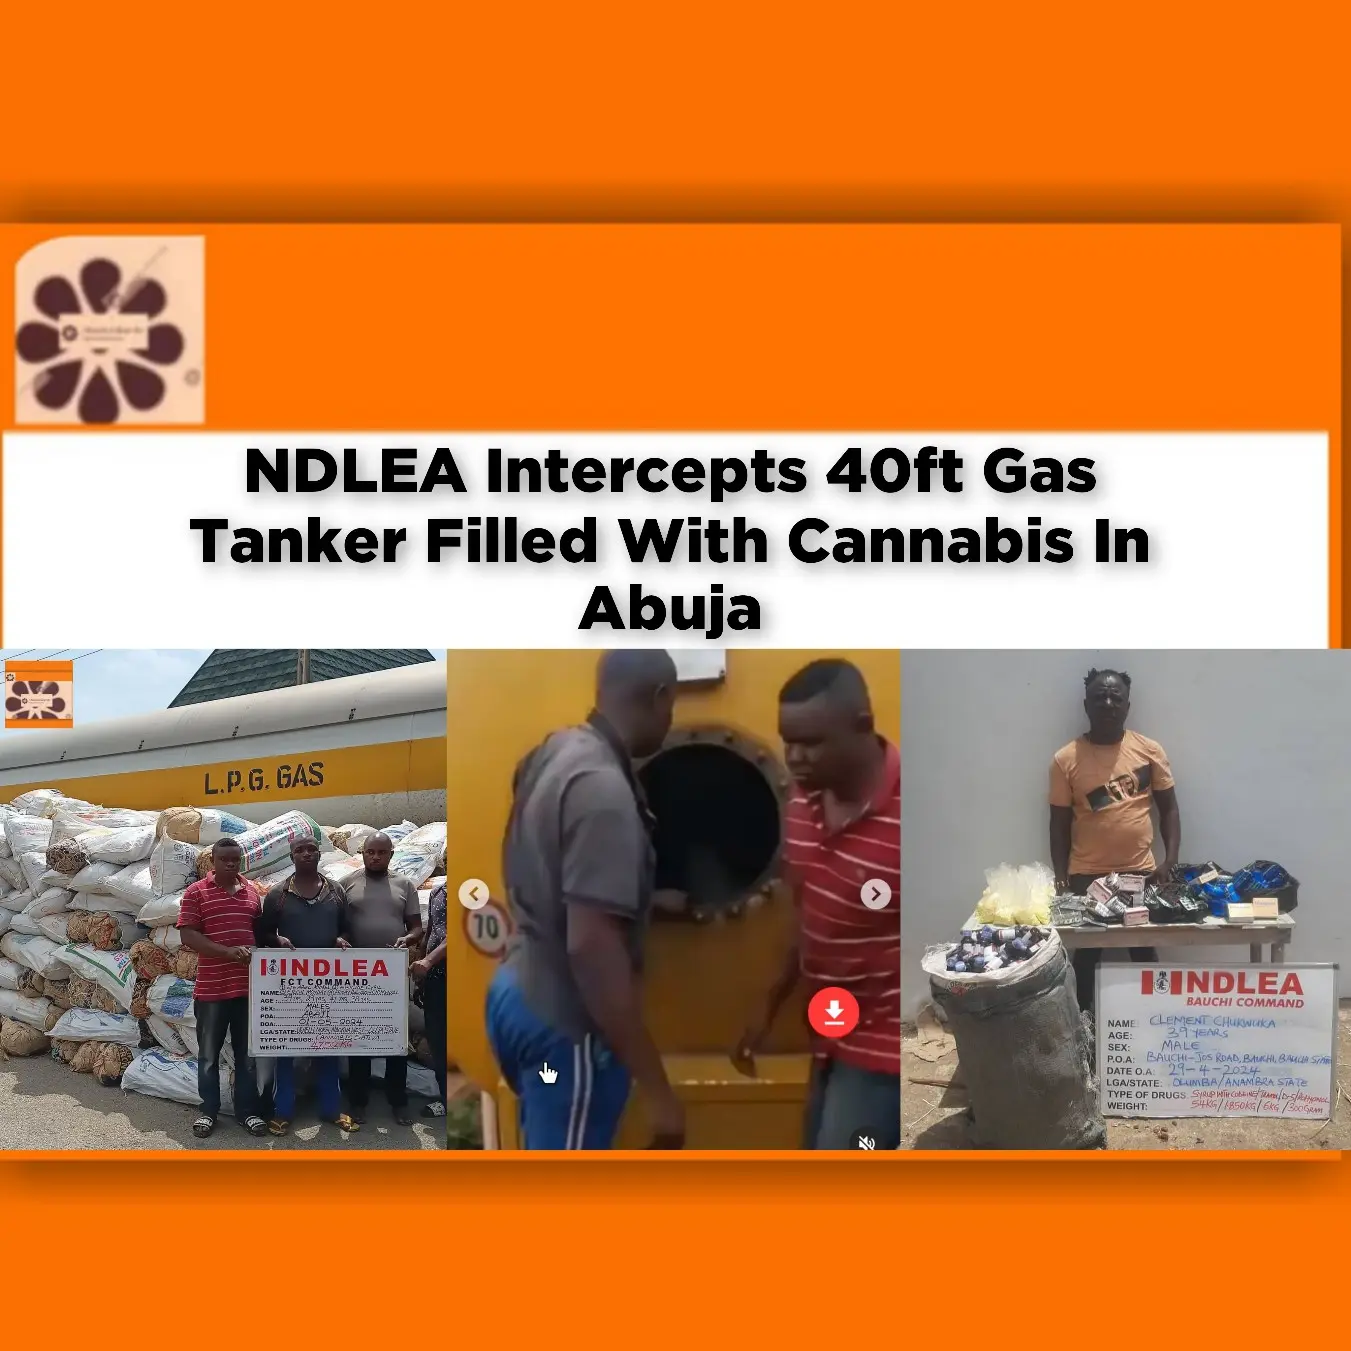 NDLEA Intercepts 40ft Gas Tanker Filled With Cannabis In Abuja ~ OsazuwaAkonedo #Ifeoluwa